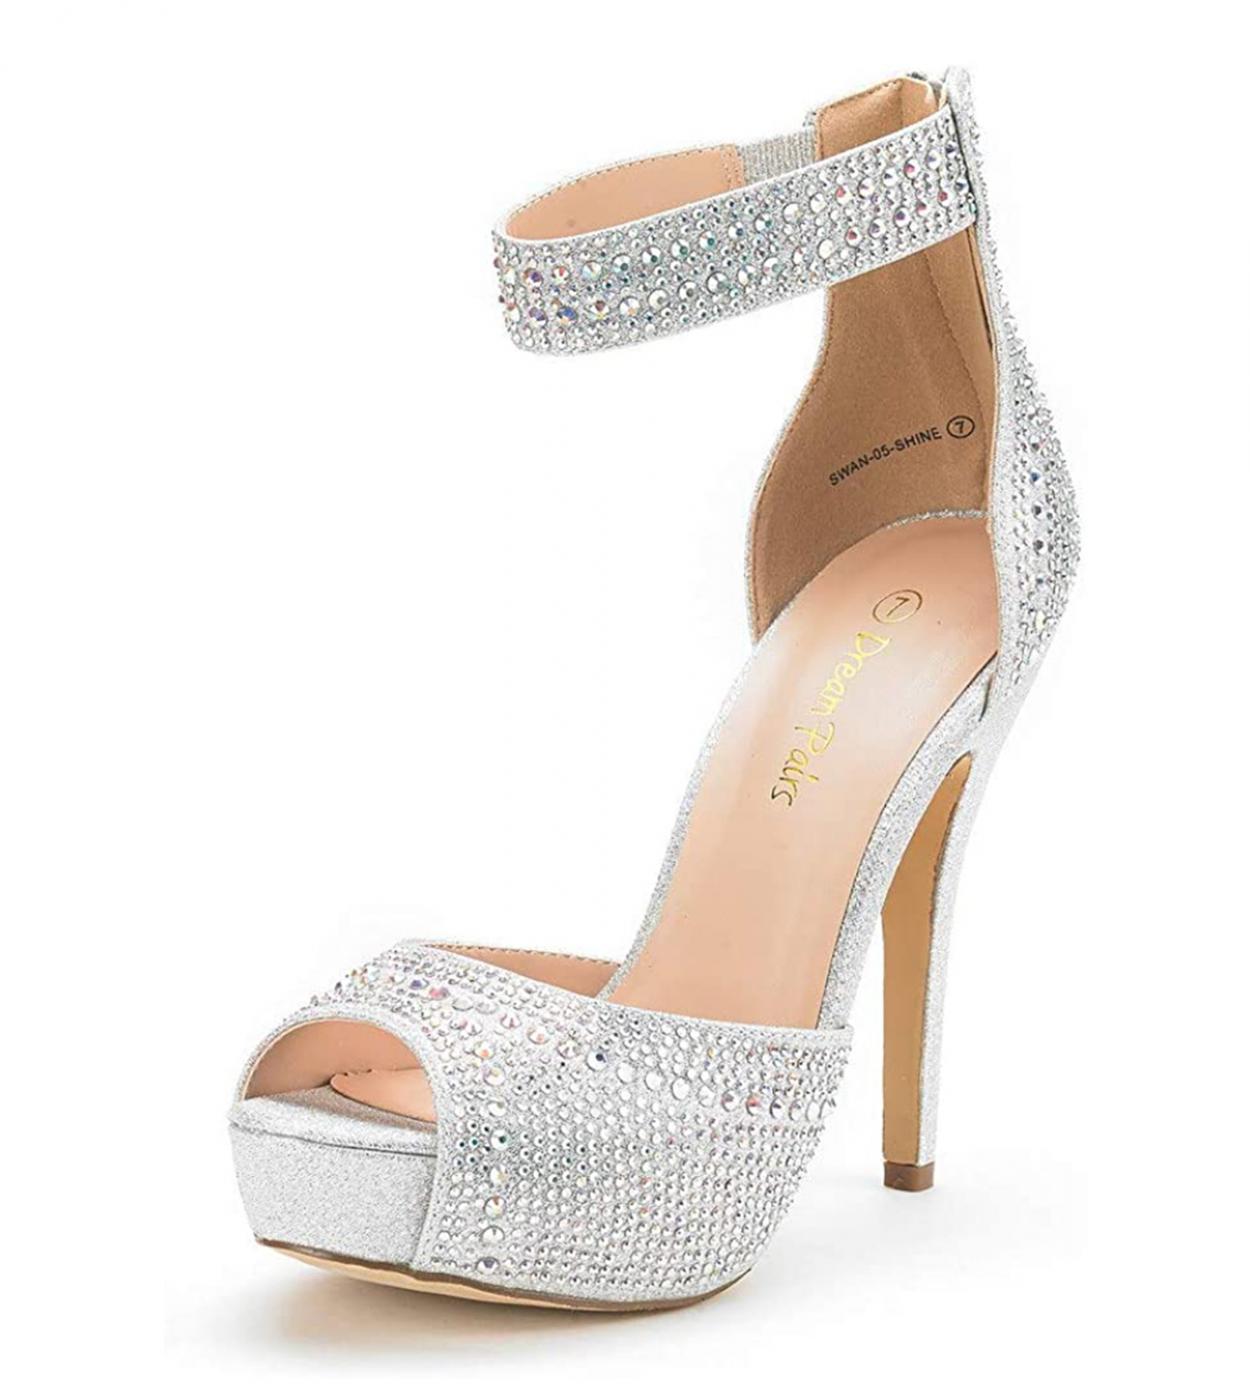 Dream Pairs Platform Sandals Women Super High Heels Party Wedding Shoes Plus Size Open Toe Crystal Shine Pumps Feminina 